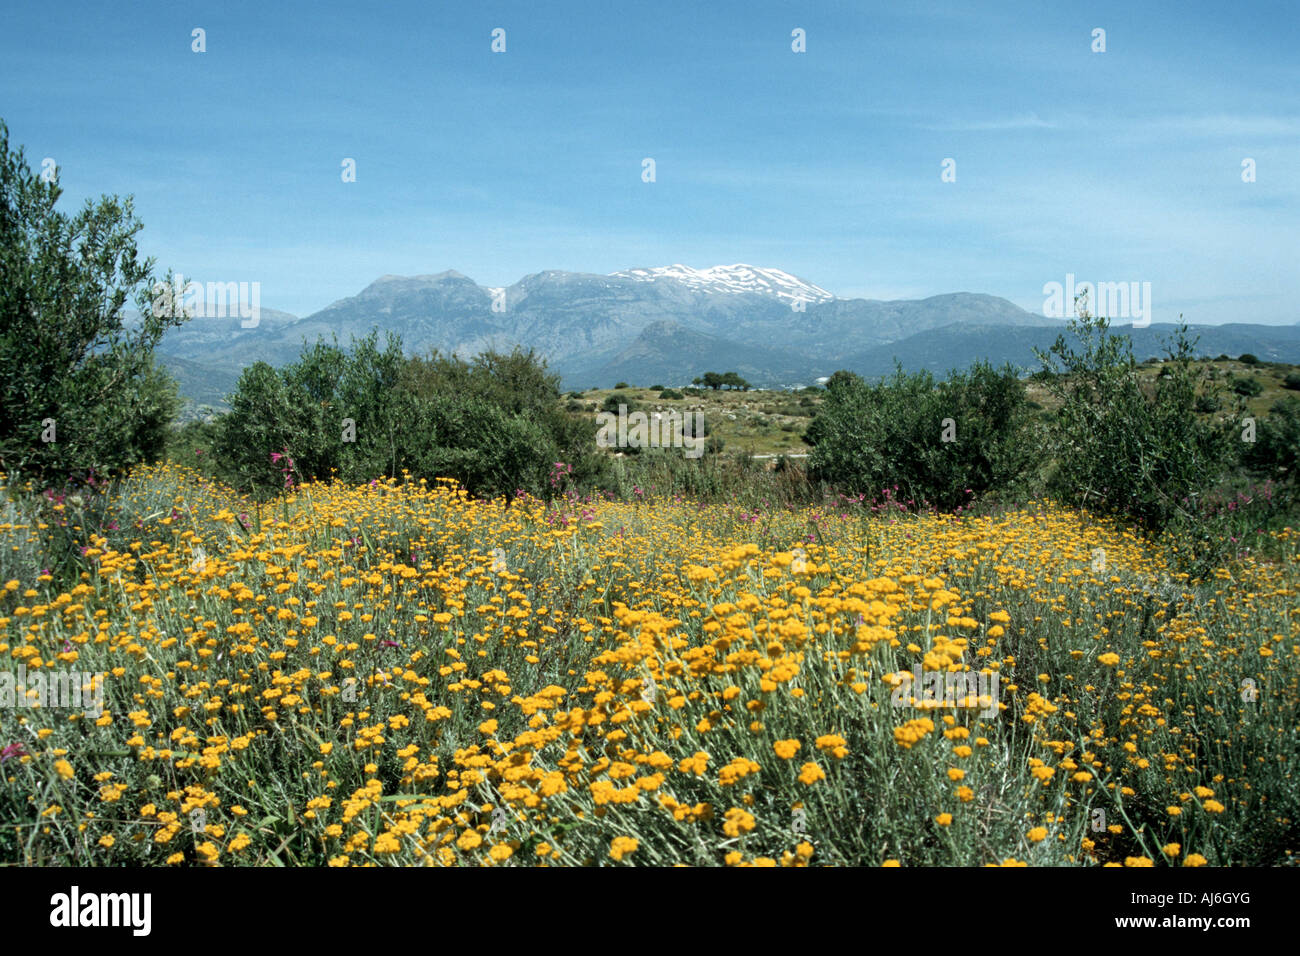 eternal flower (Helichrysum stoechas), blooming plants in mountain scenery, Greece, Creta Stock Photo